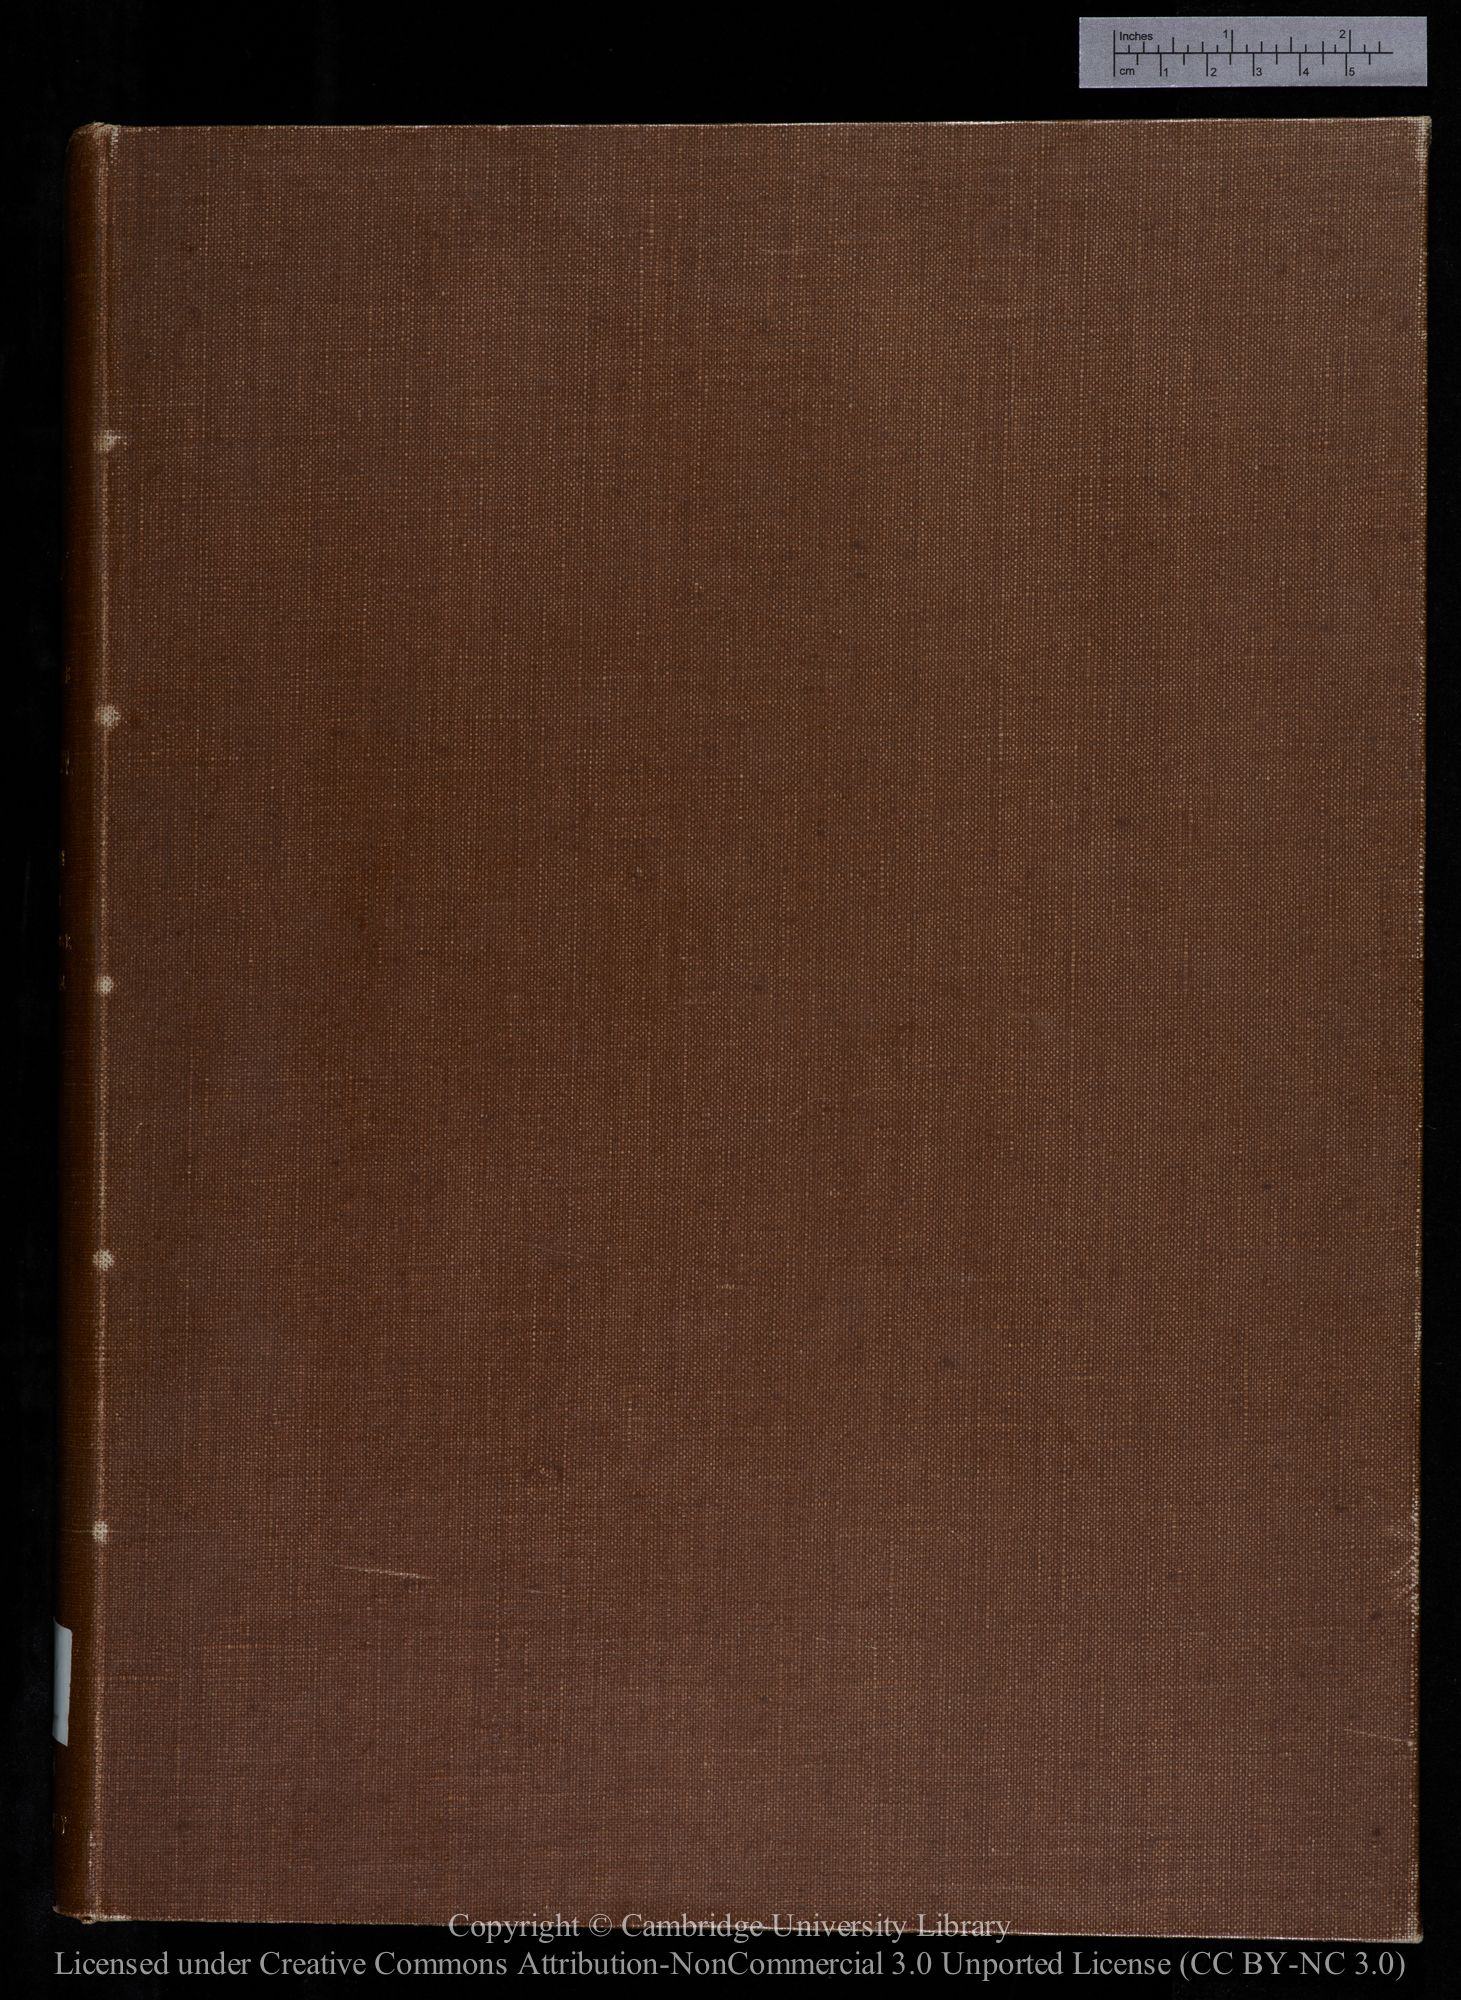 Log book of HMS Adventure